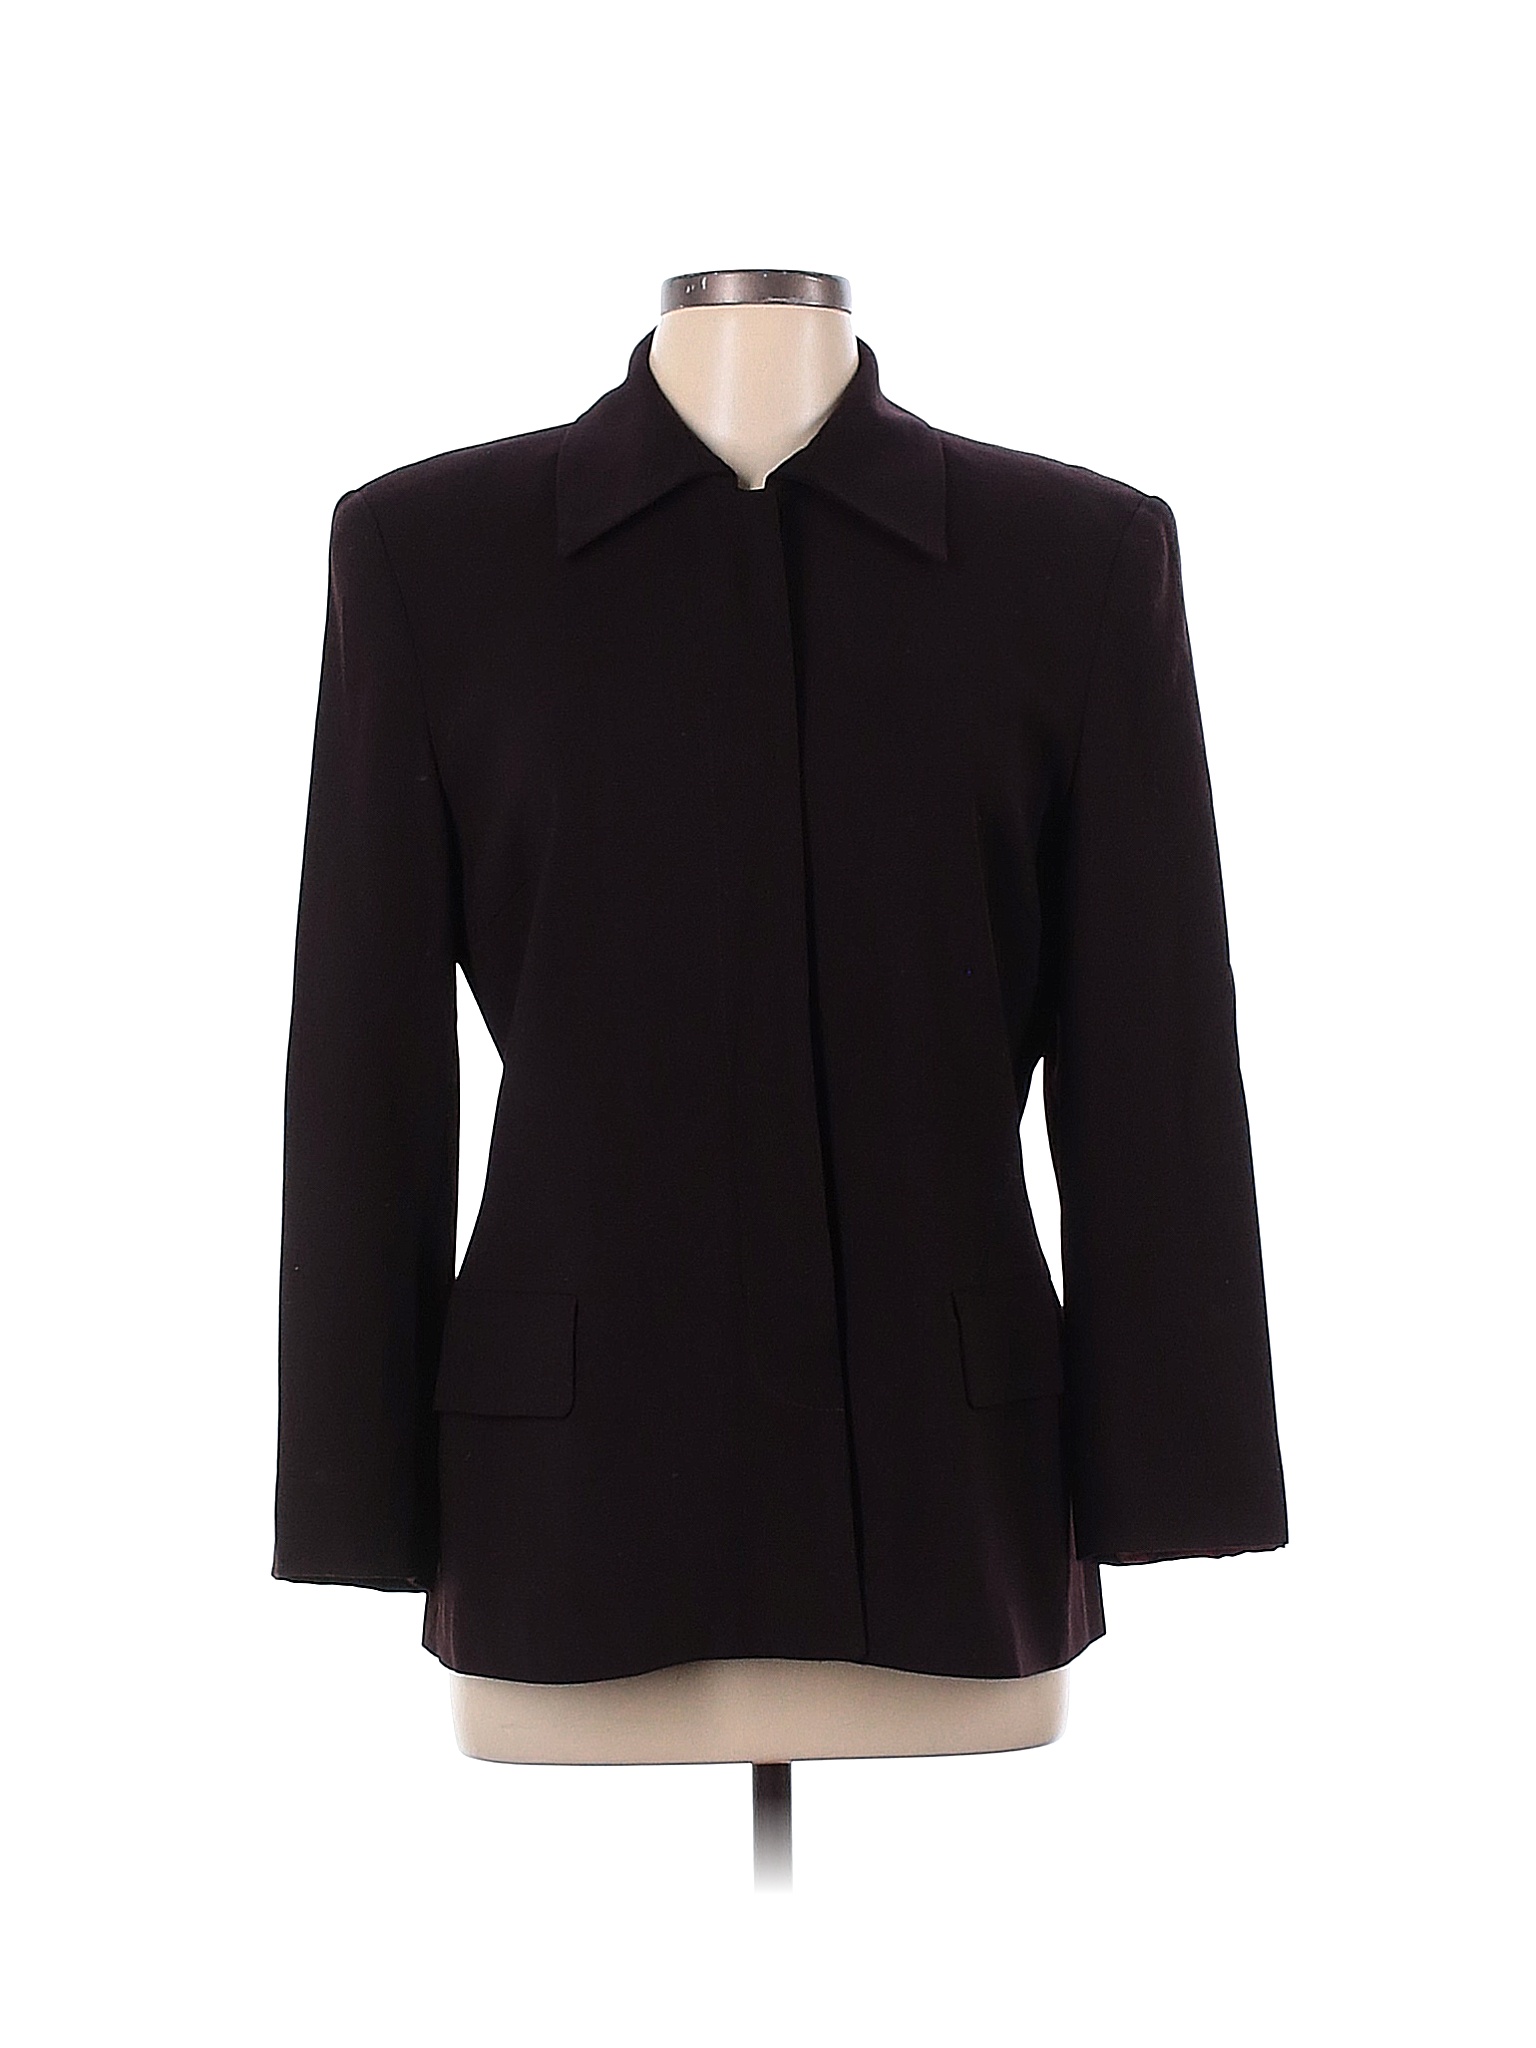 Vantana Solid Black Brown Blazer Size 12 - 75% off | thredUP